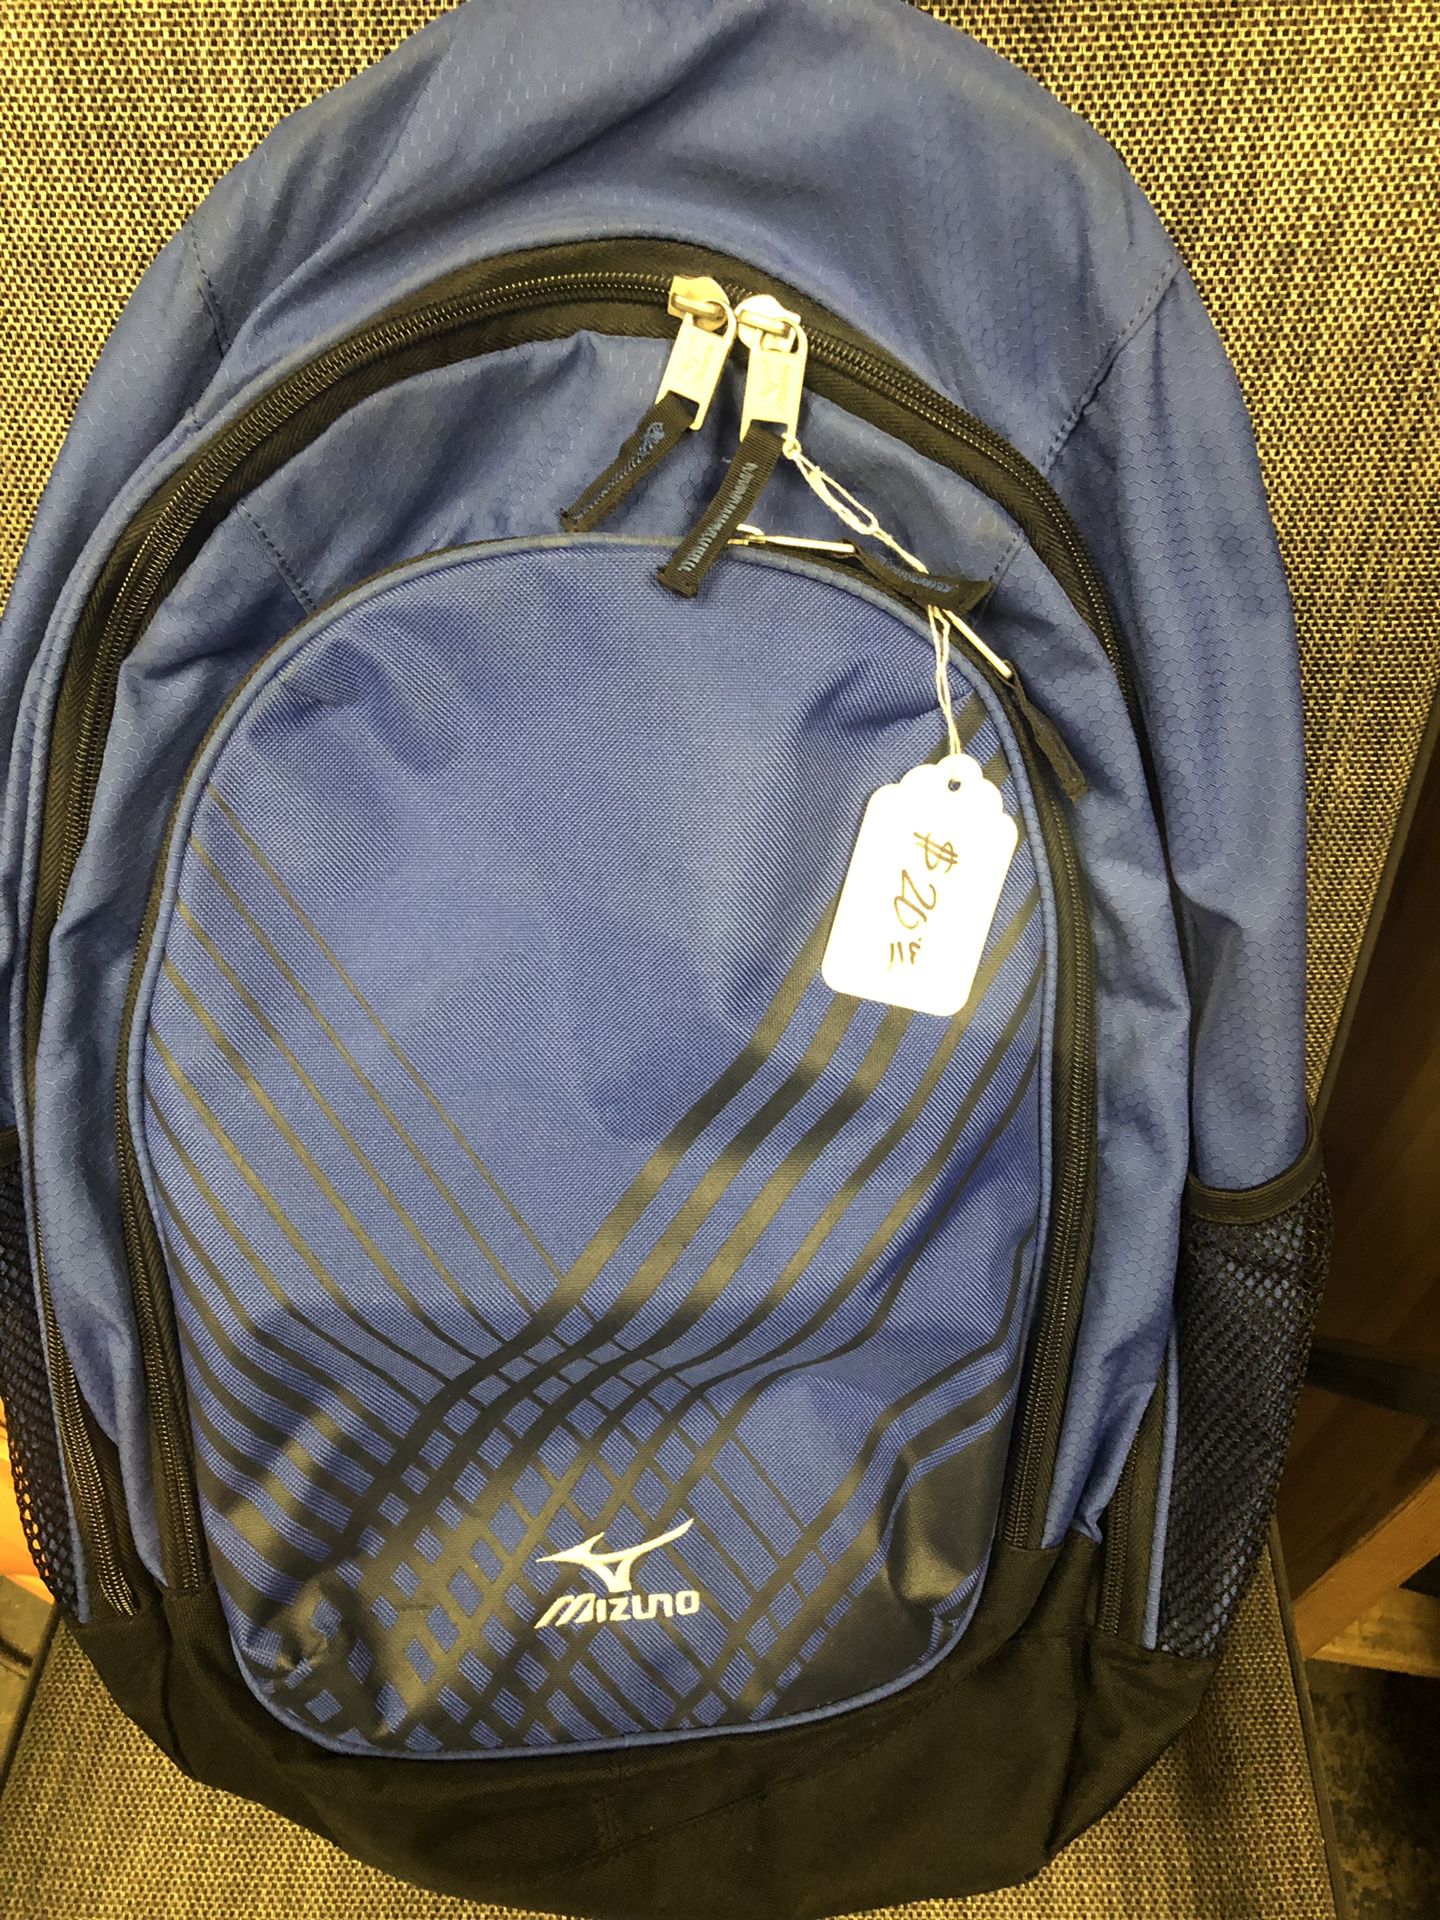 Mizuno Baseball Backpack